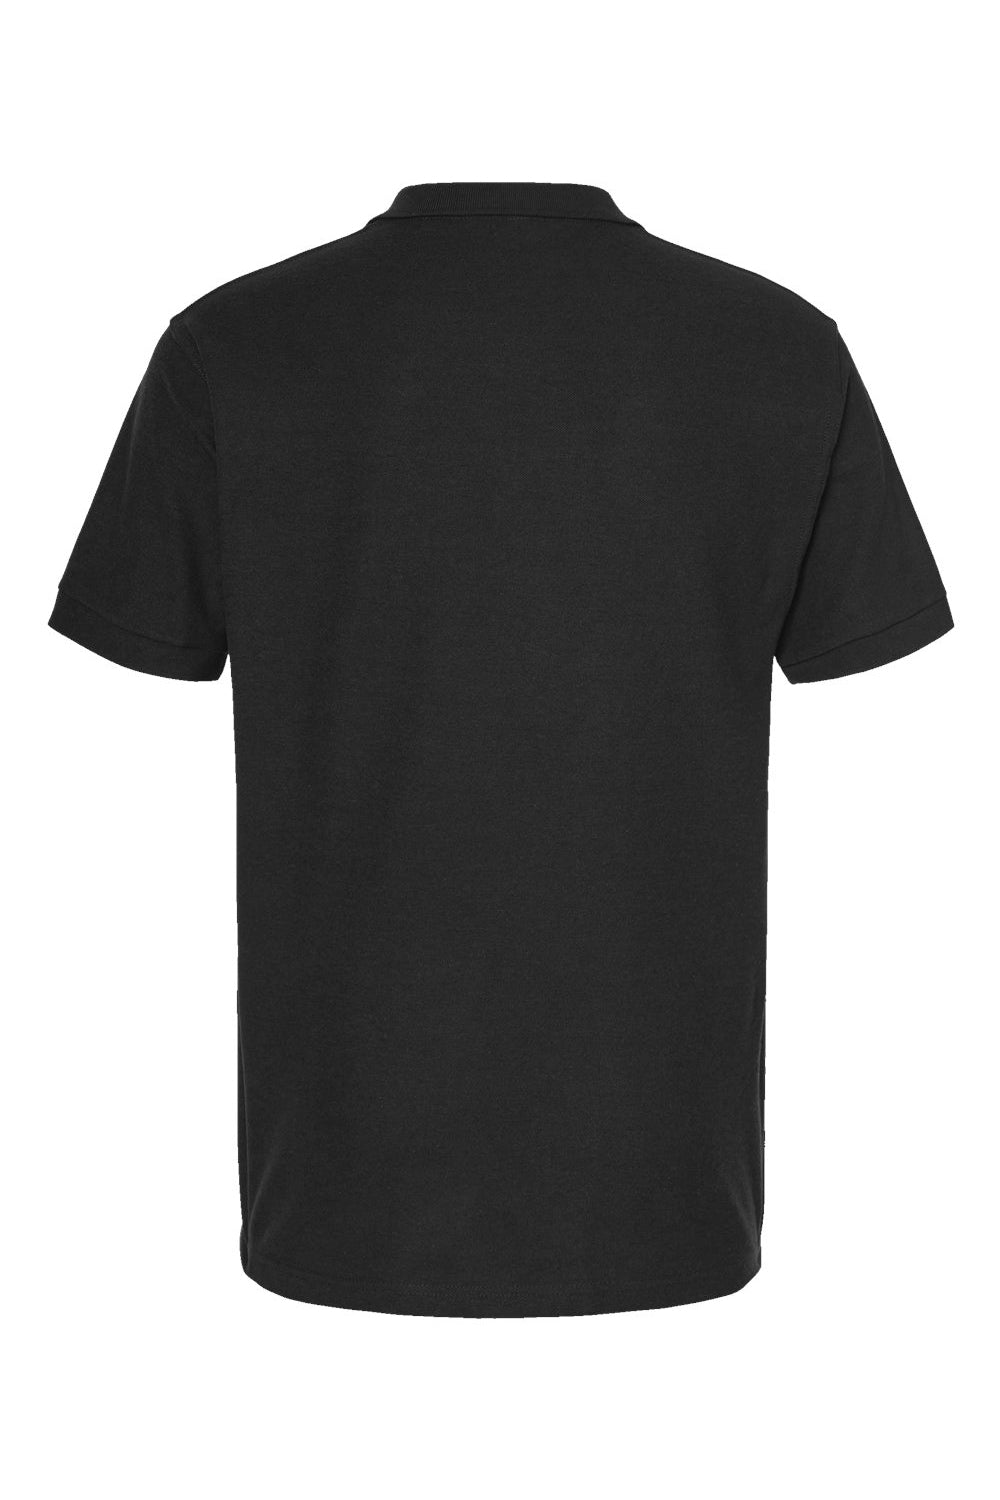 Tultex 400 Mens Sport Shirt Sleeve Polo Shirt Black Flat Back